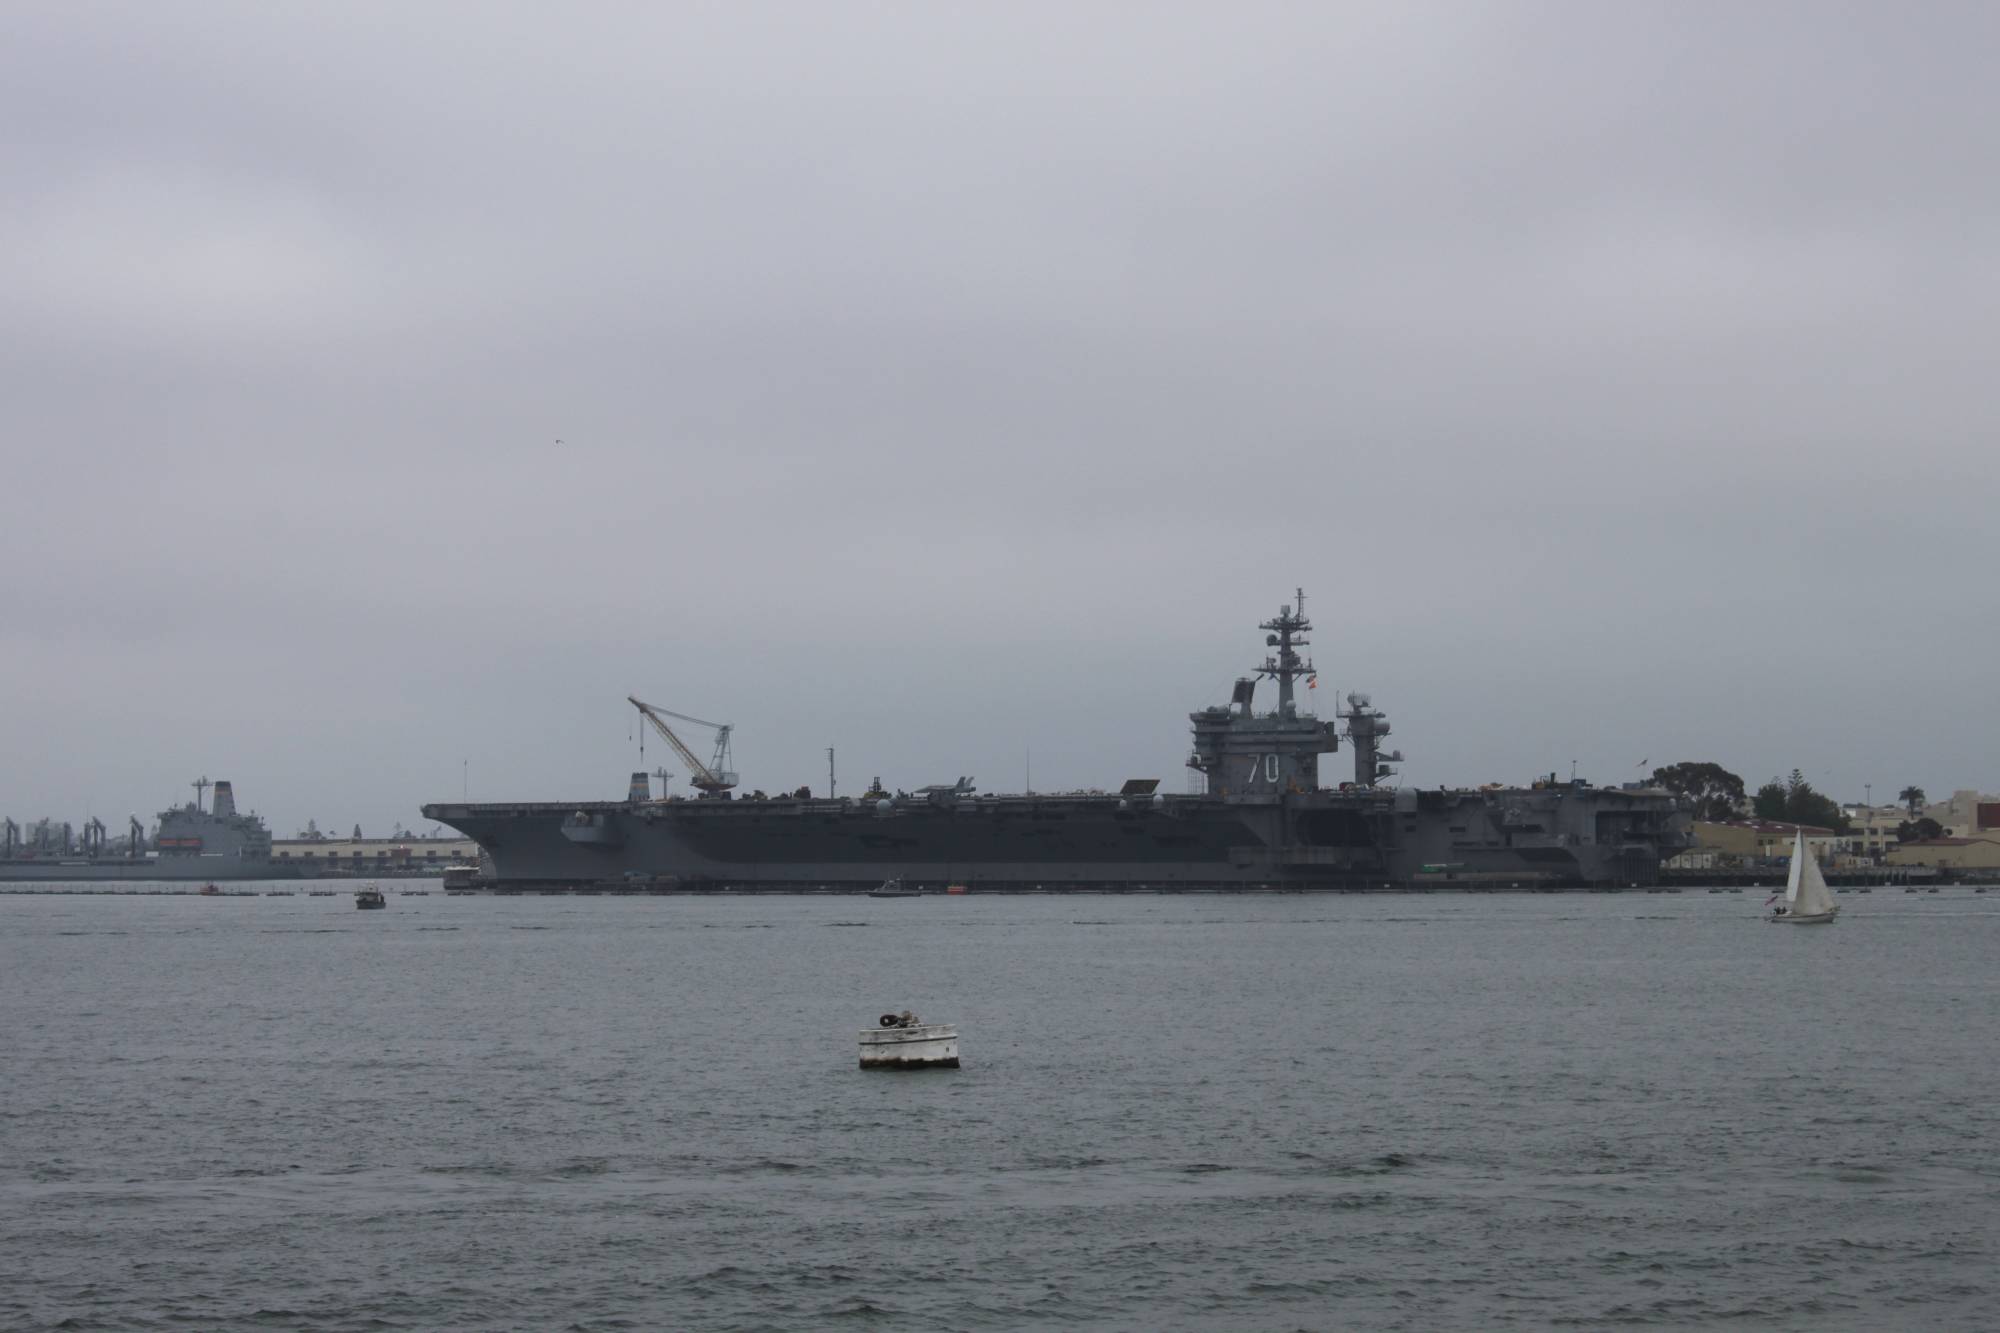 US Navy ship USS Carl Vinson in port in San Diego